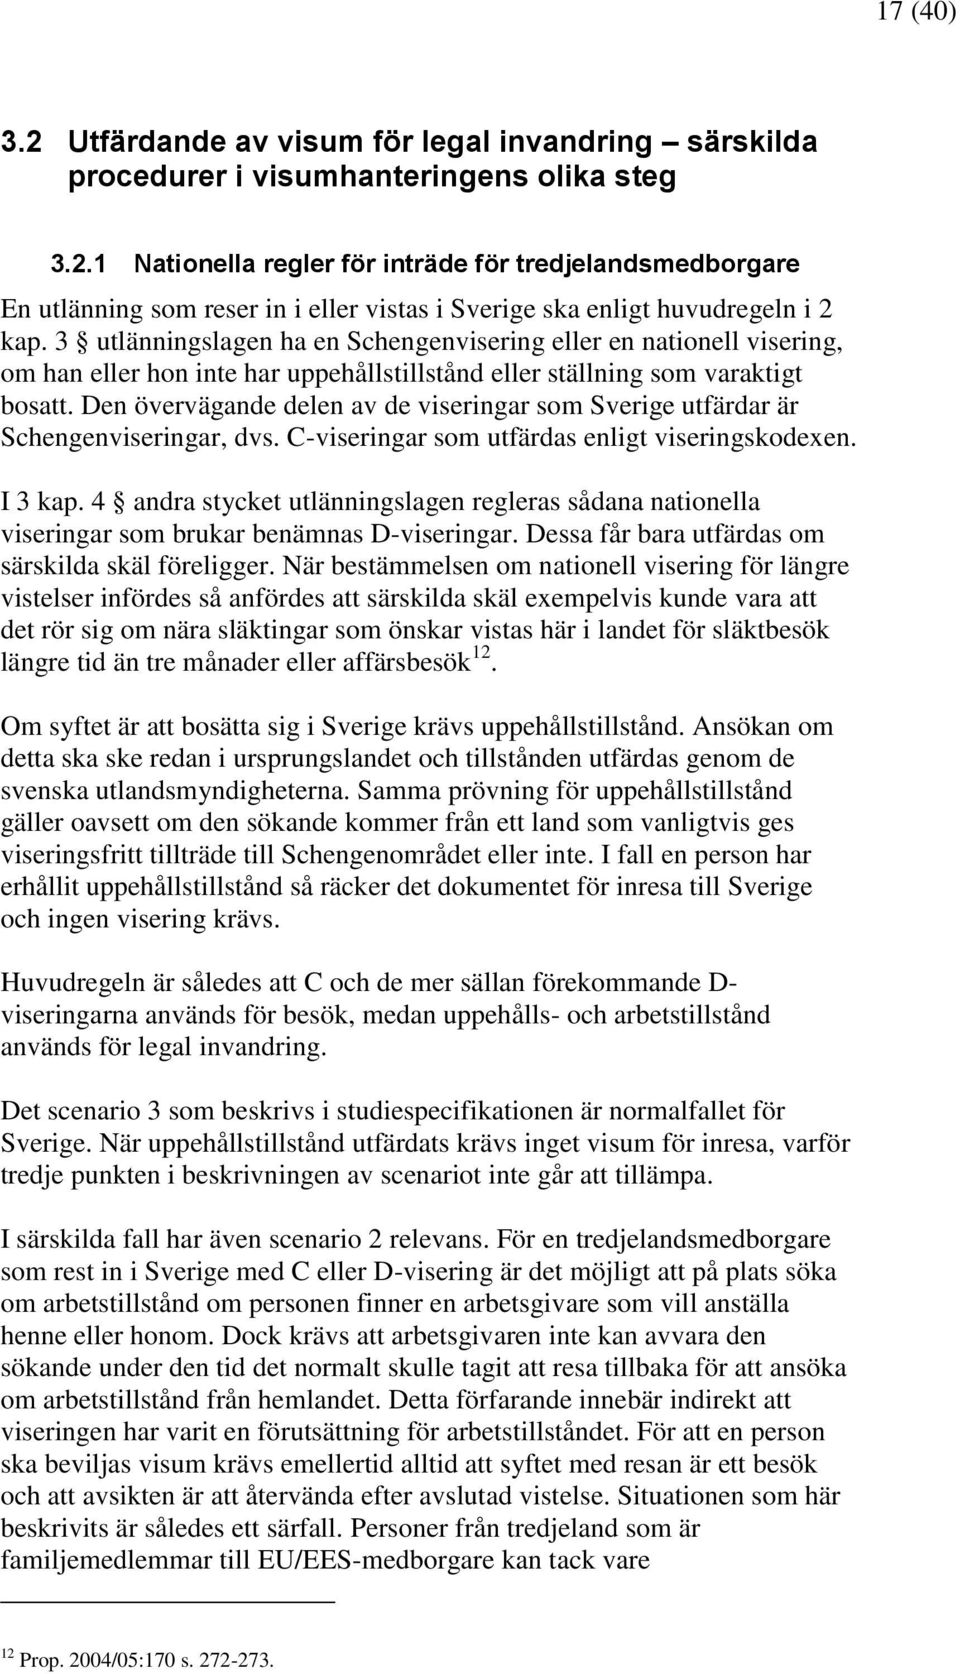 Viseringspolitik som migrationskanal i Sverige - PDF Free Download